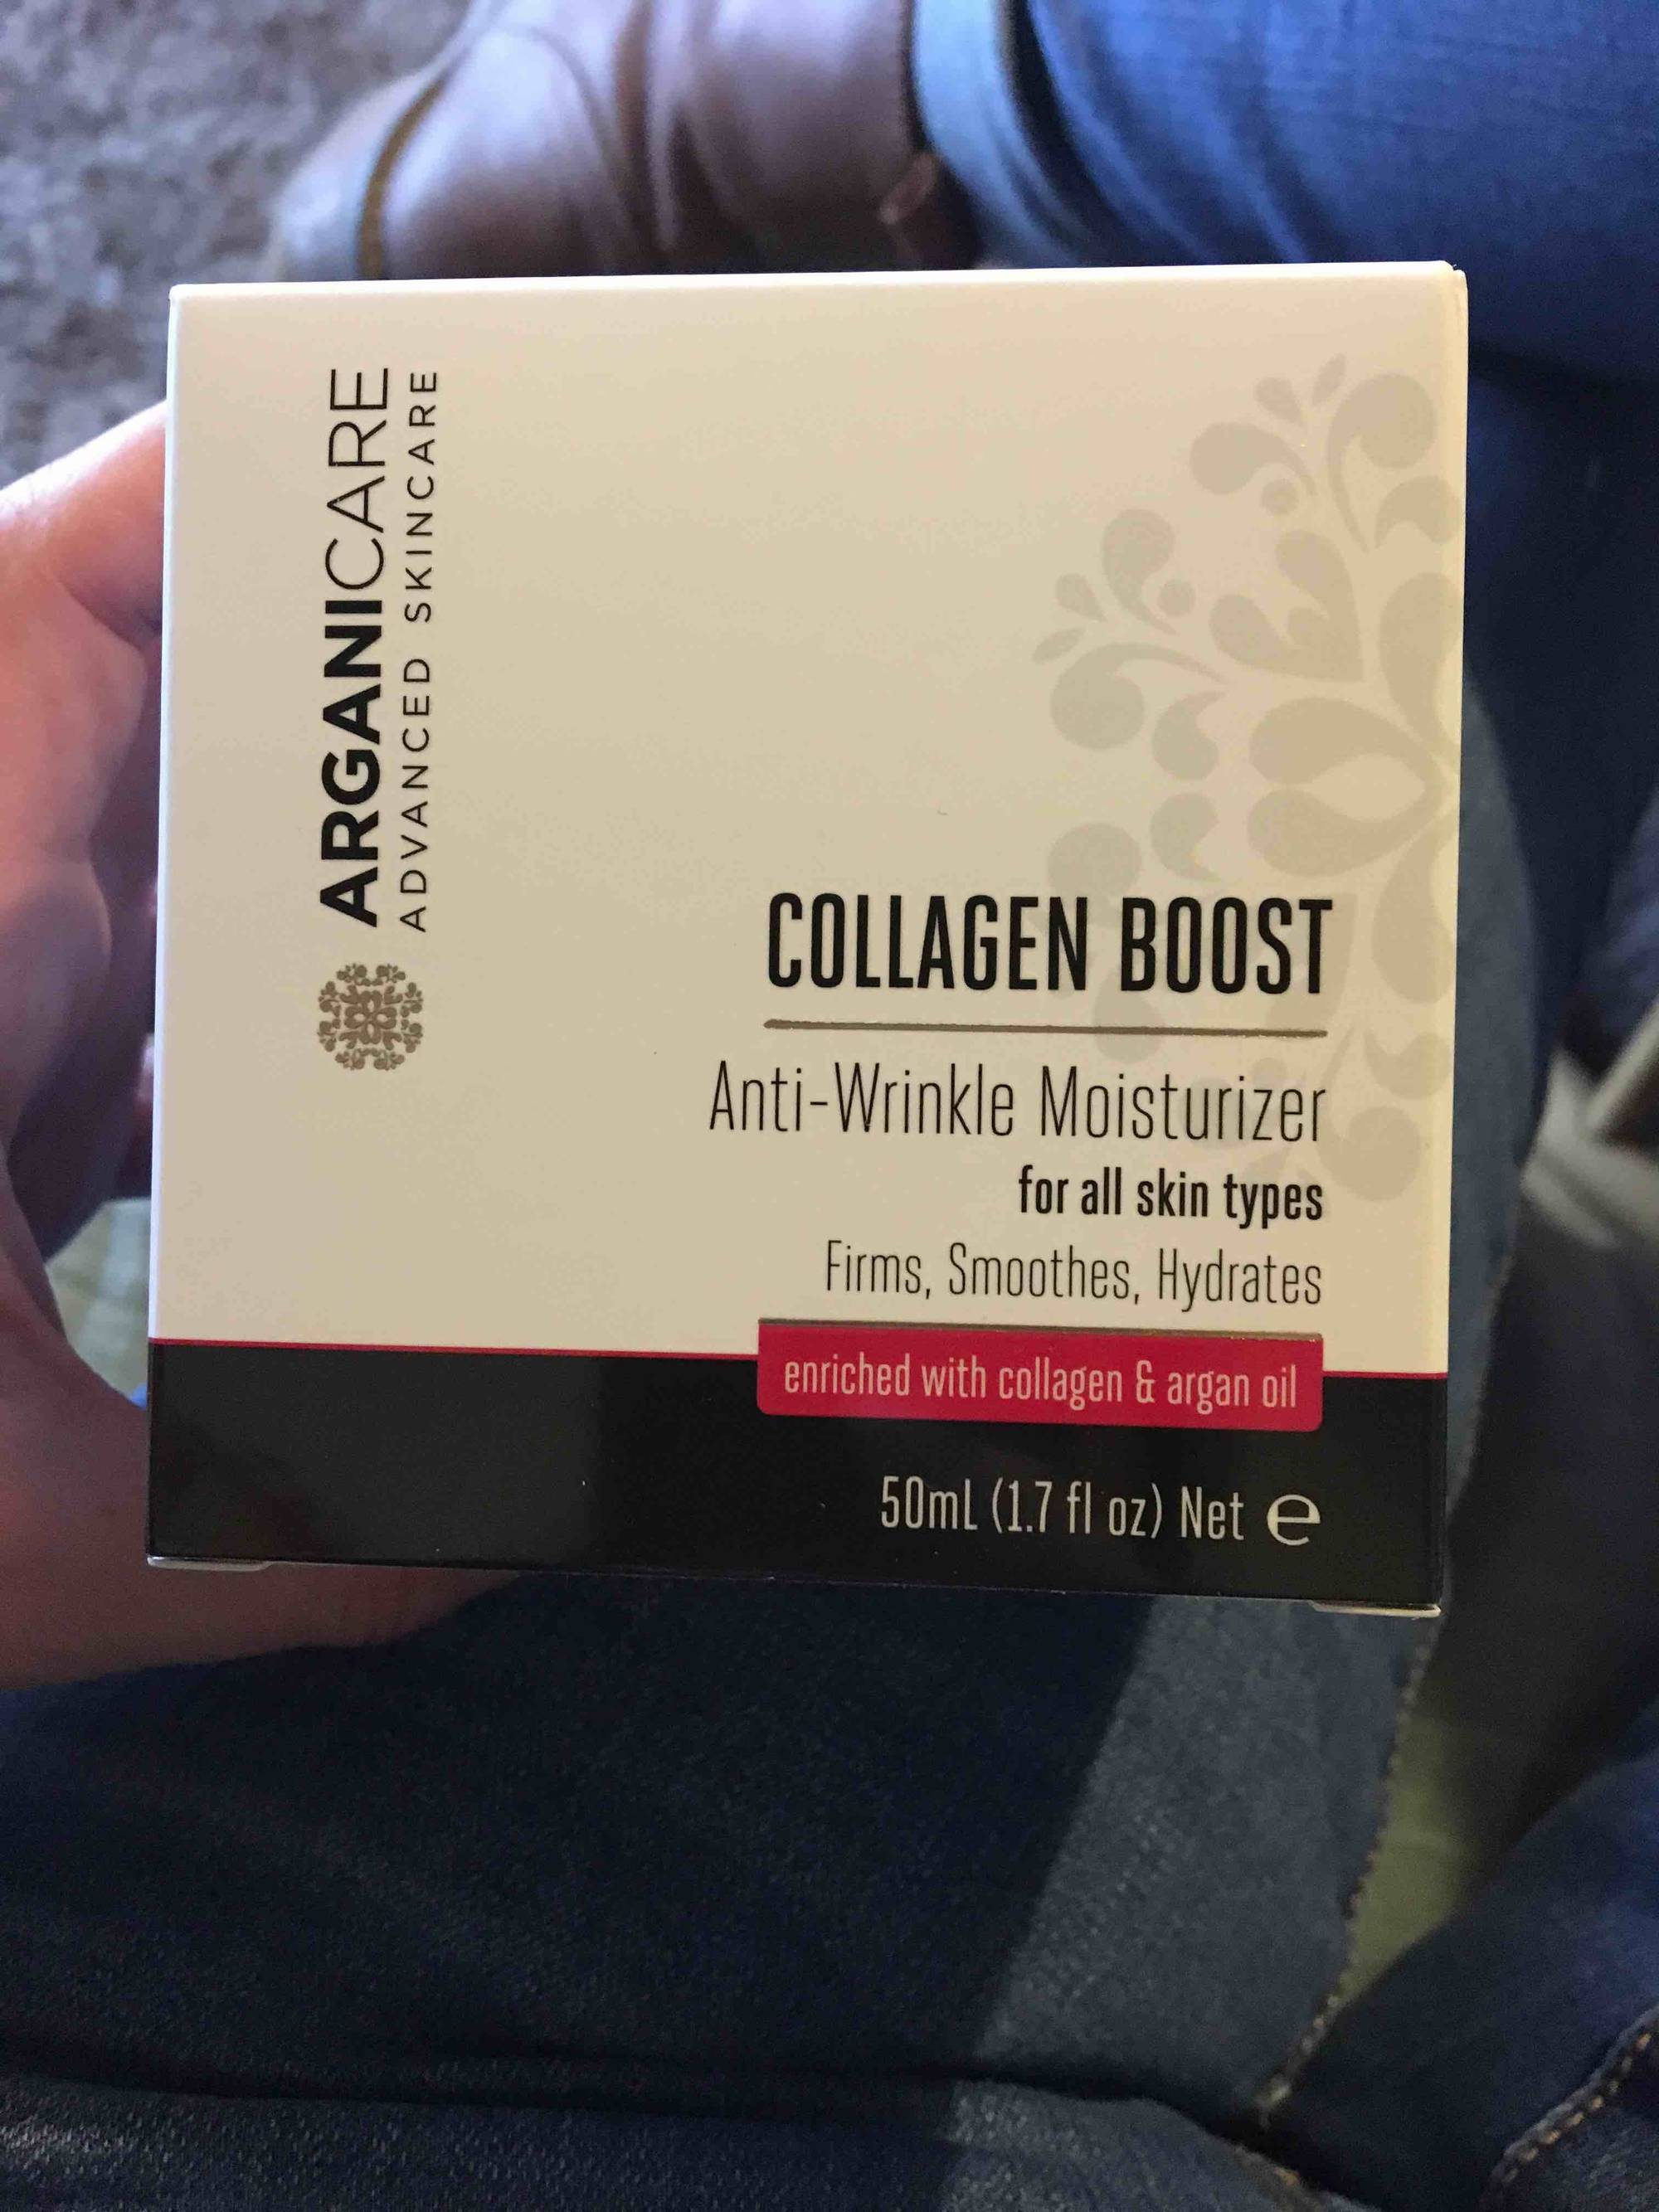 ARGANICARE - Collagen boost - Anti-wrinkle moisturizer